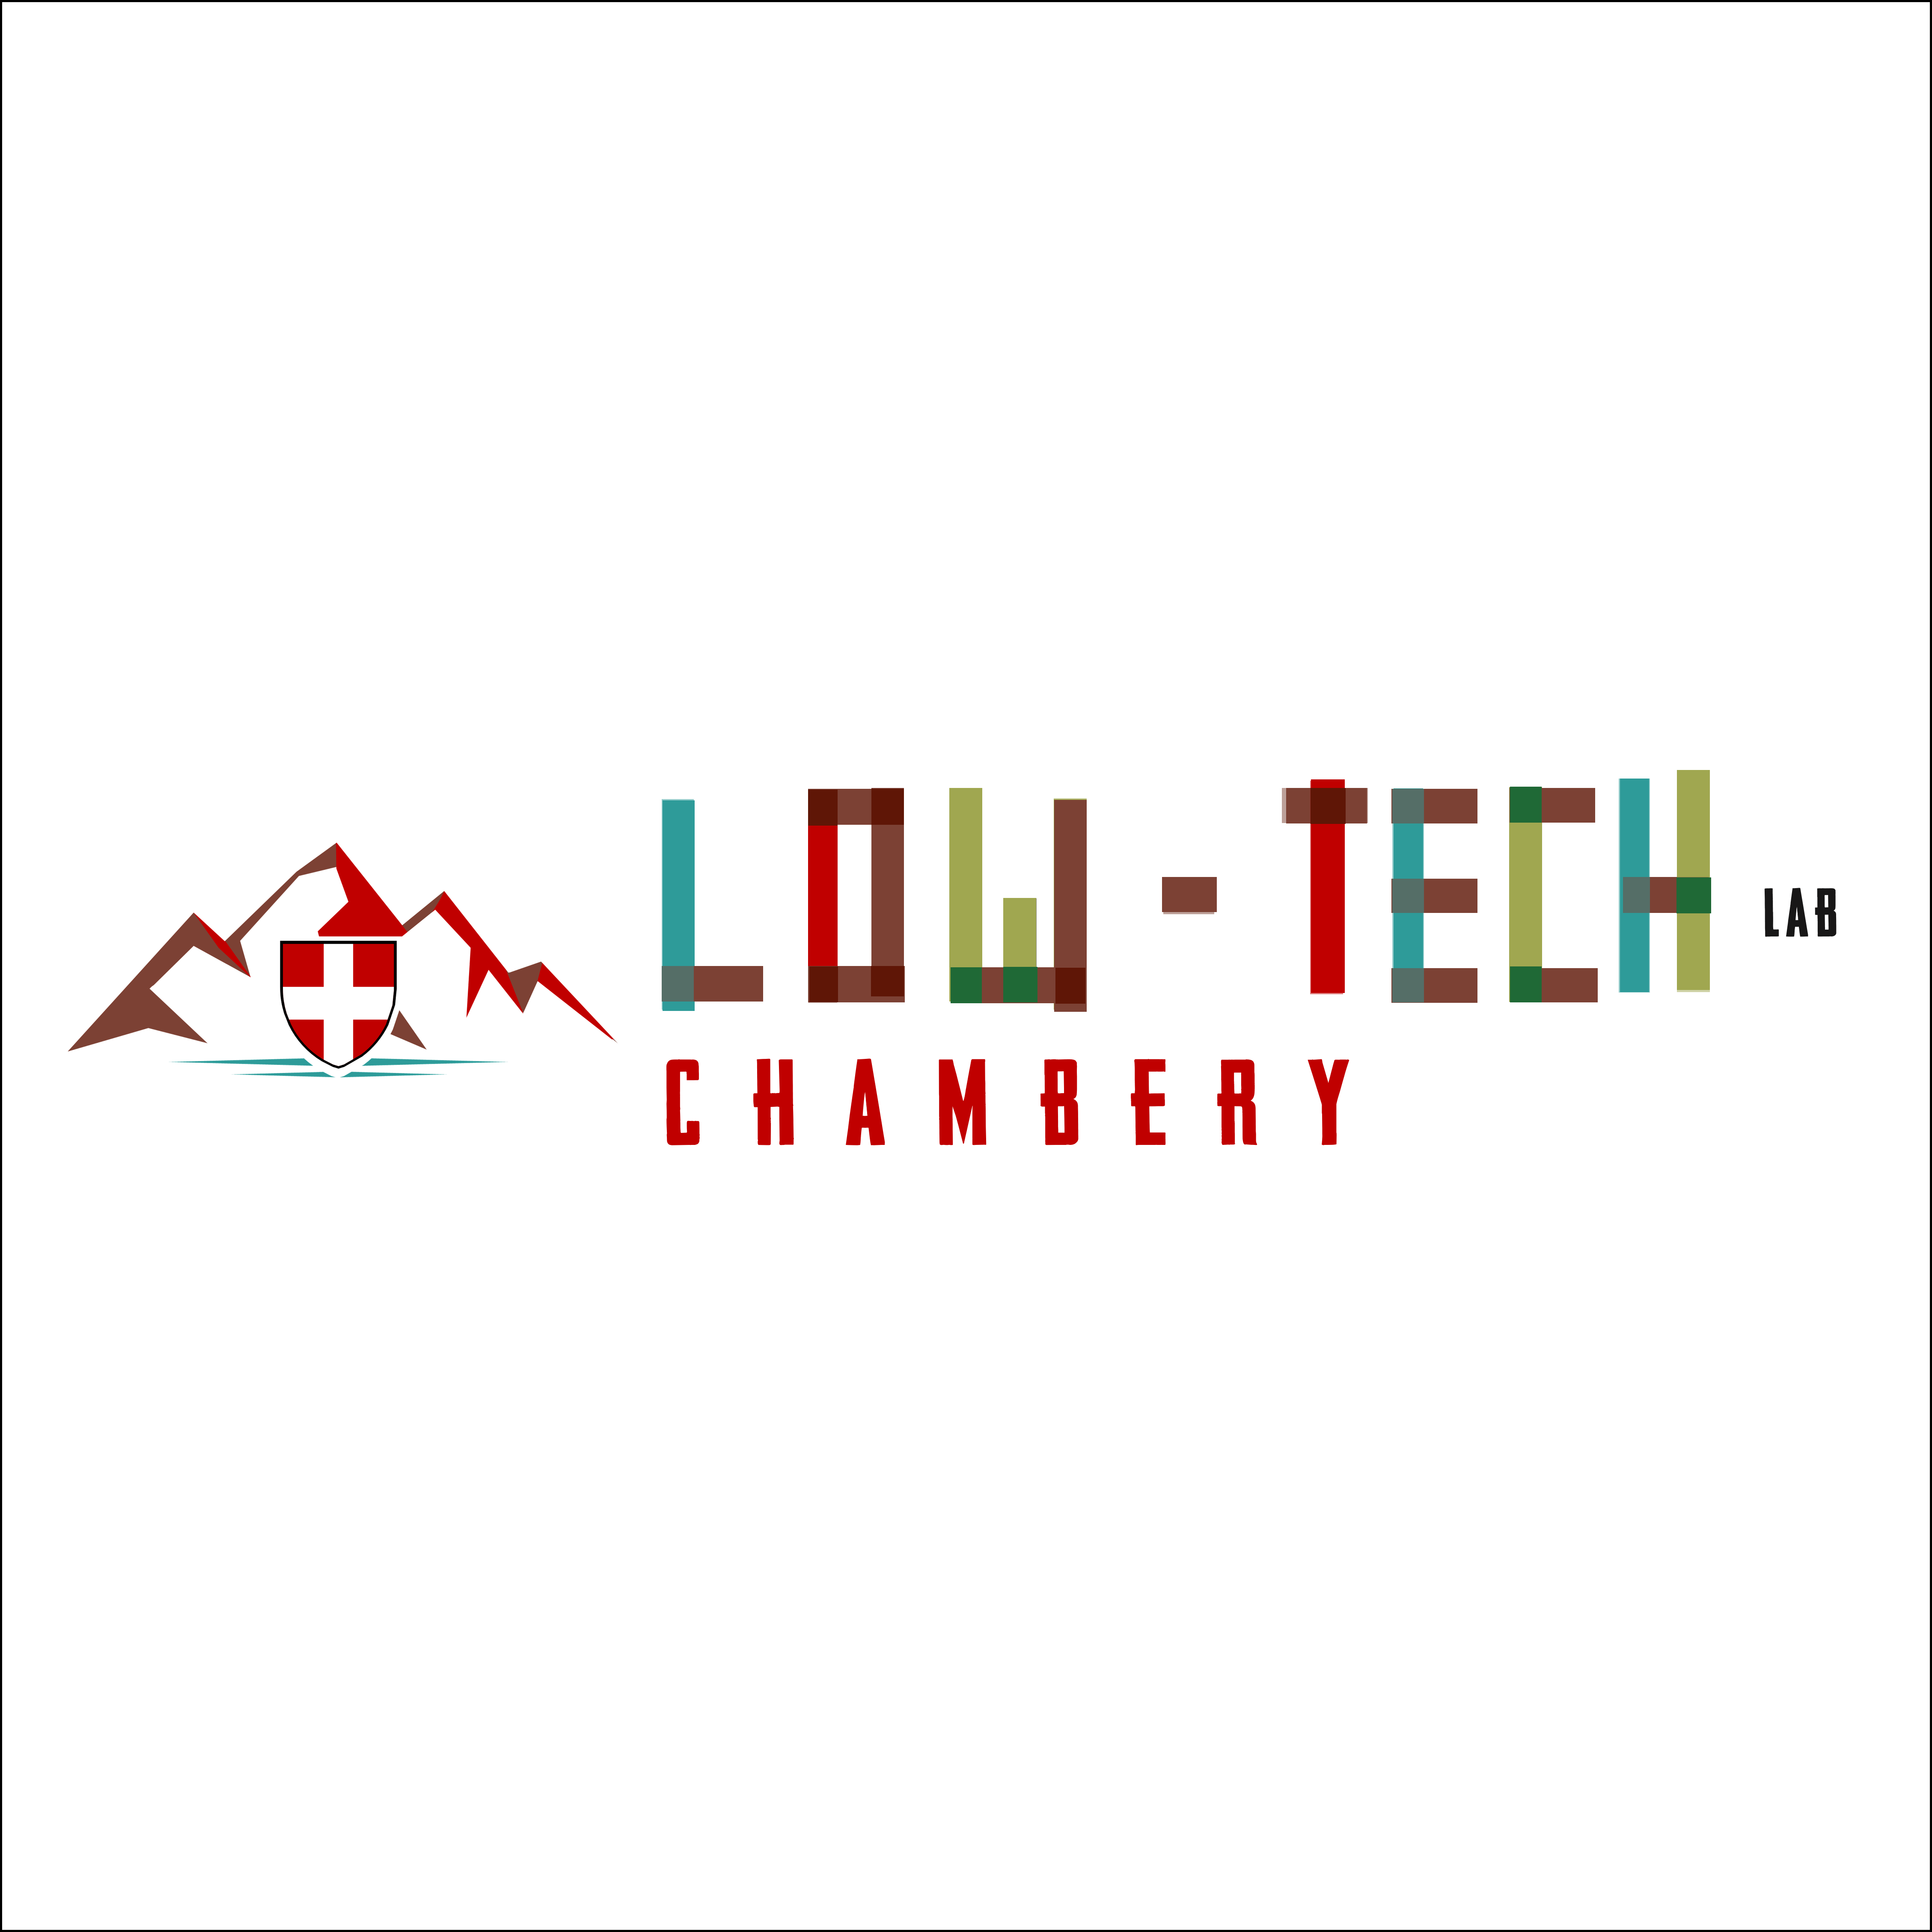 Group-Low-Tech Lab Chamb ry Low-tech Lab Logo G-Carr -B.png